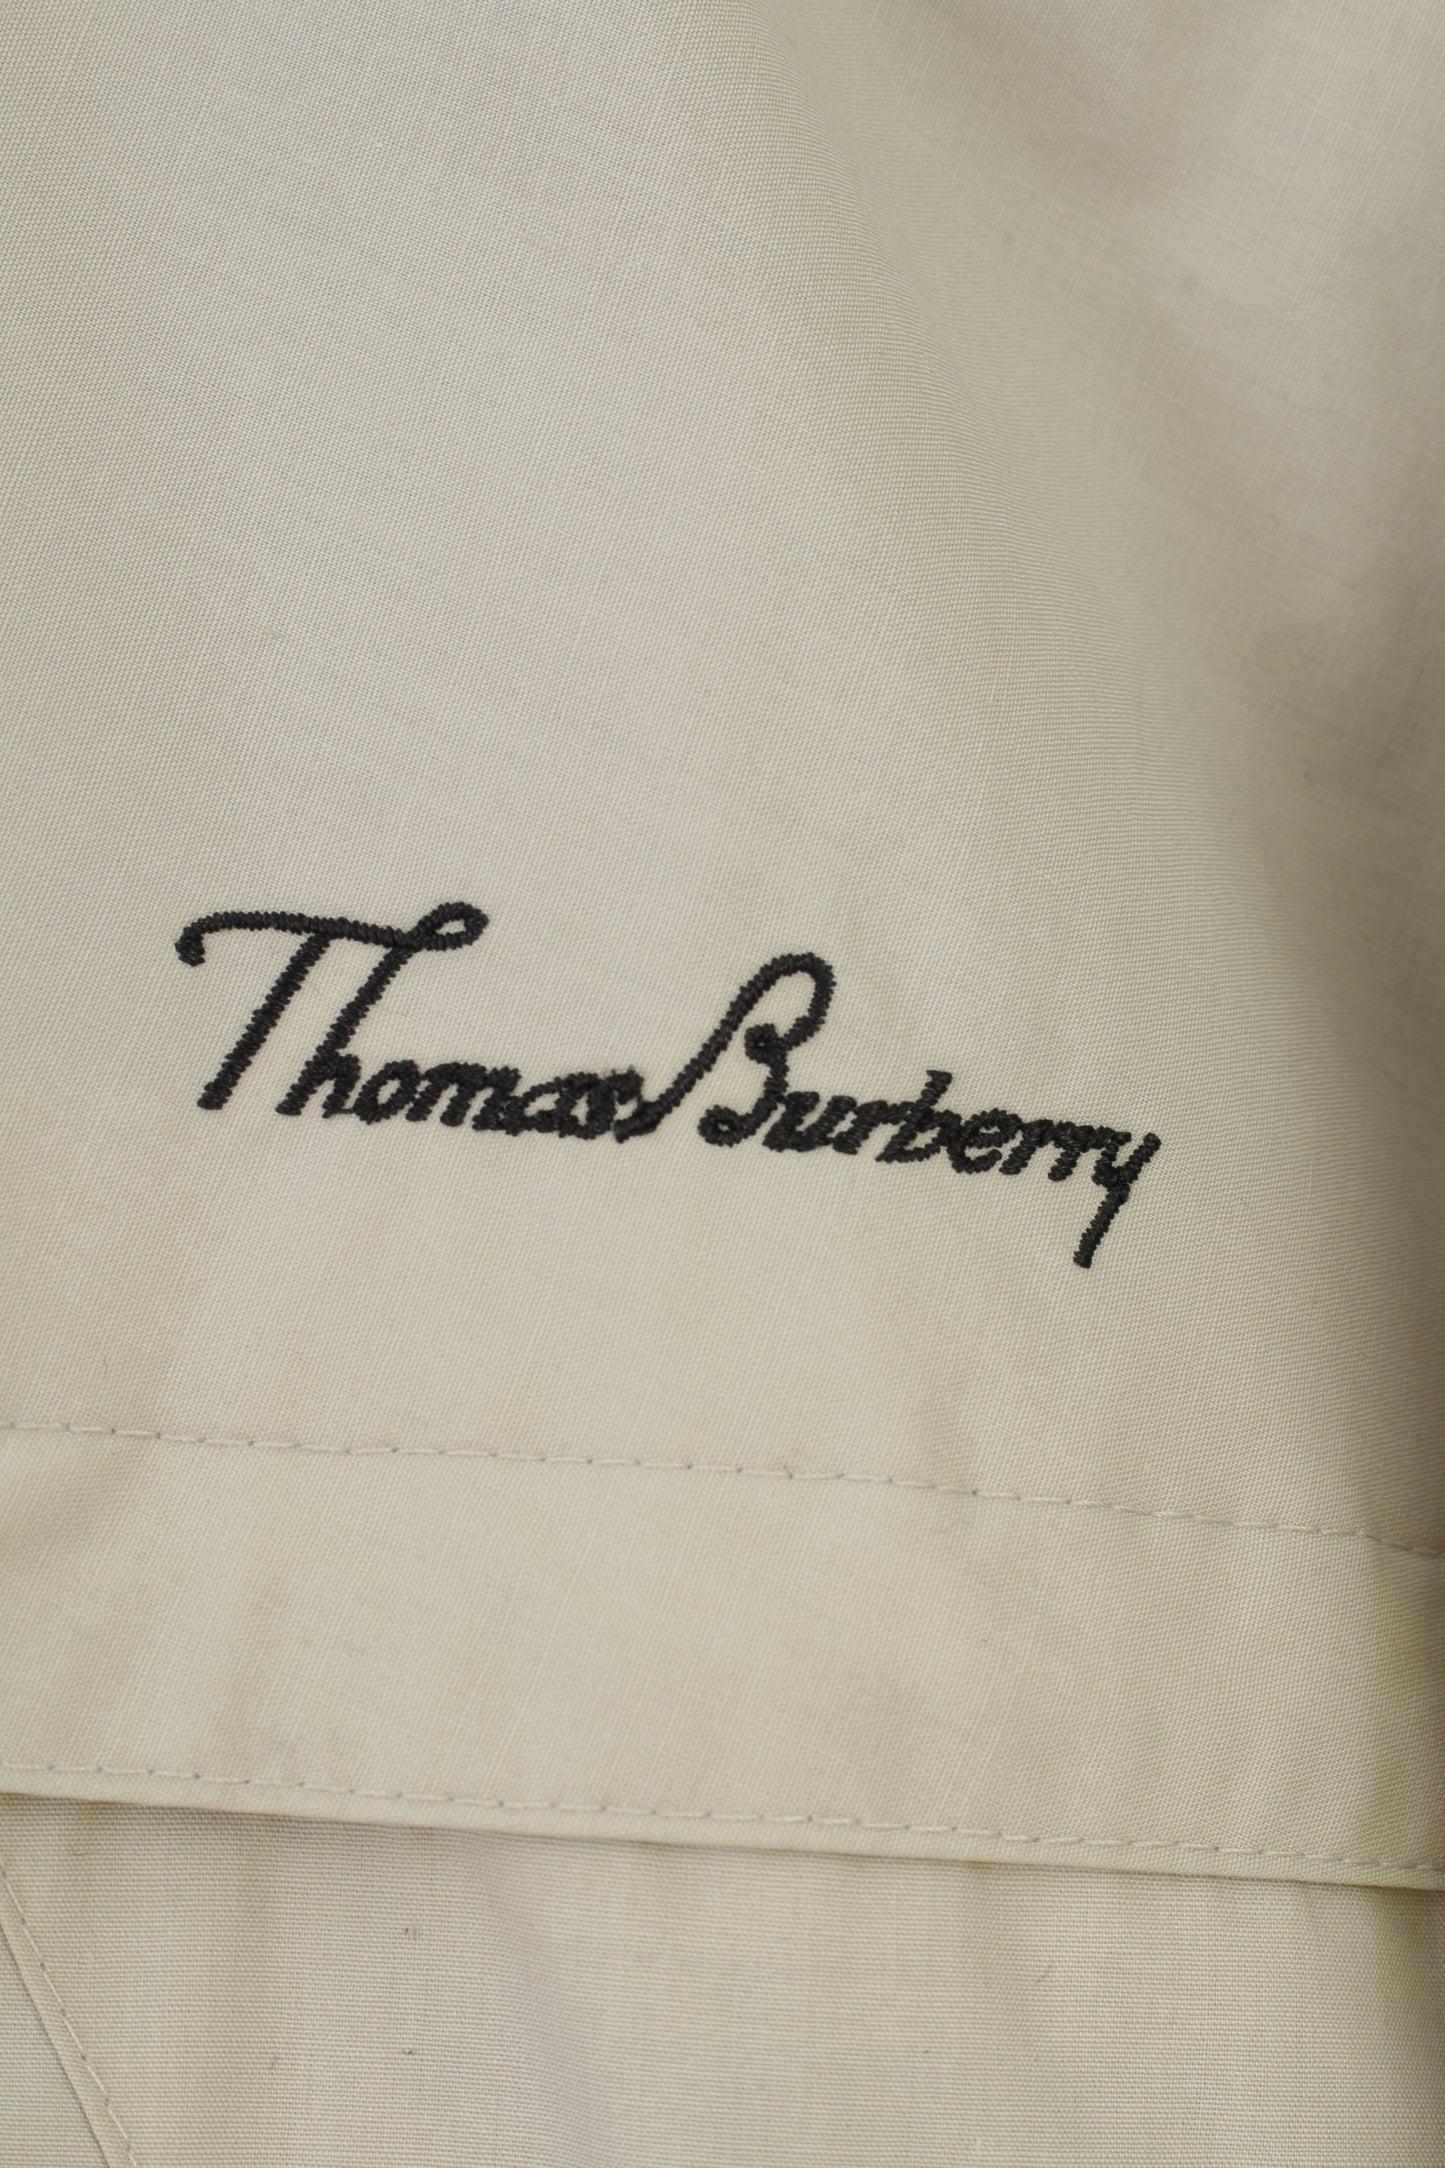 Thomas Burberry Men L Jacket Beige Full Zipper Hood Vintage Top